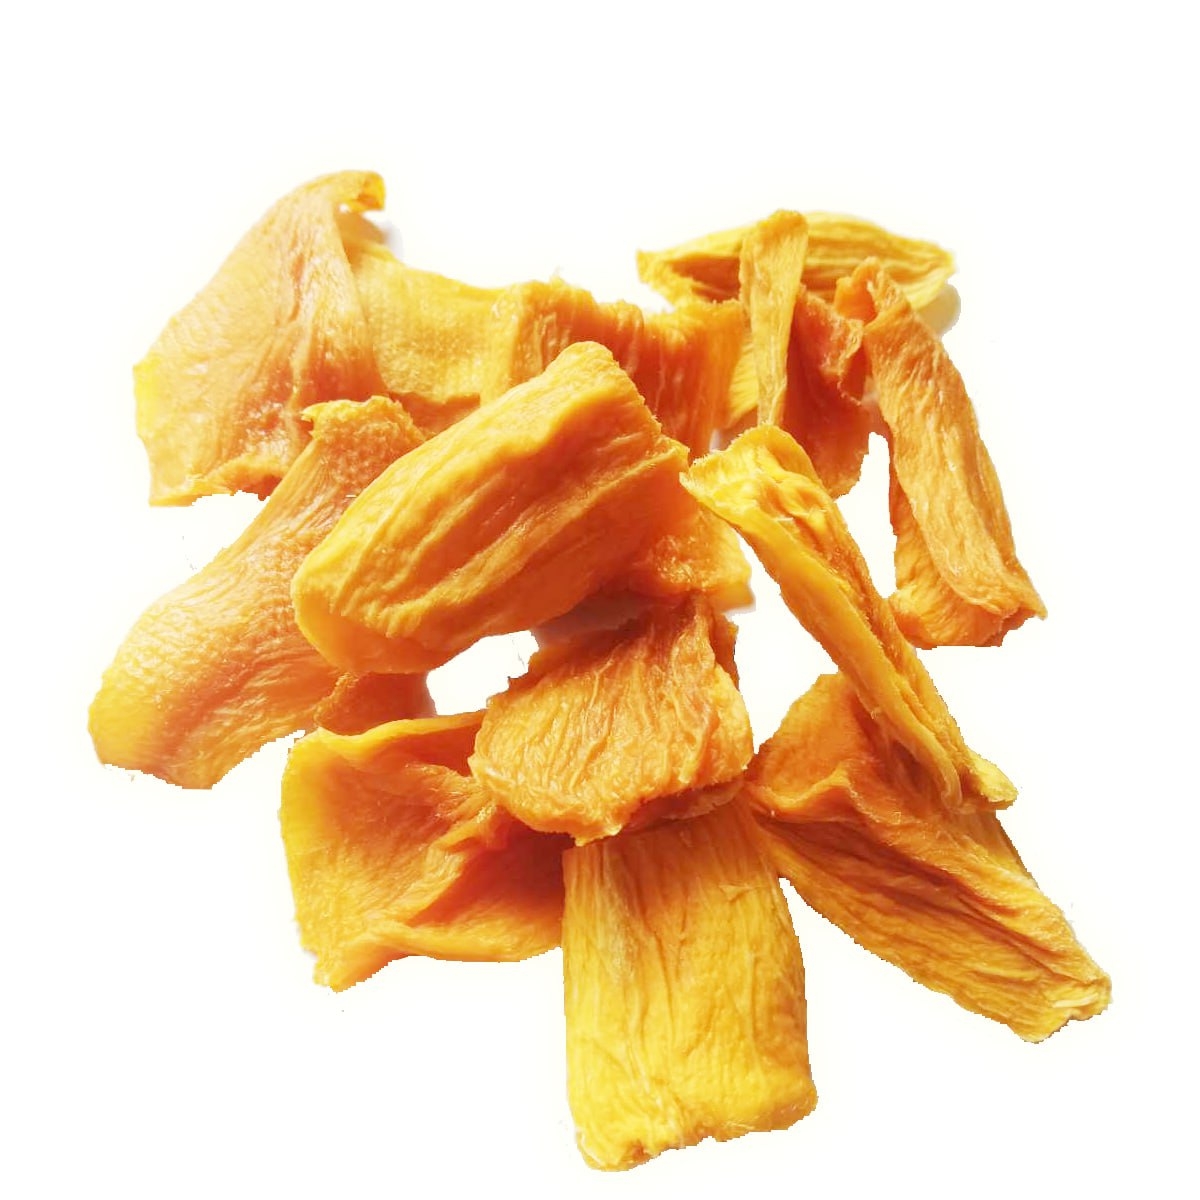 Kirirom Dried Mango No Sugar * 1000g